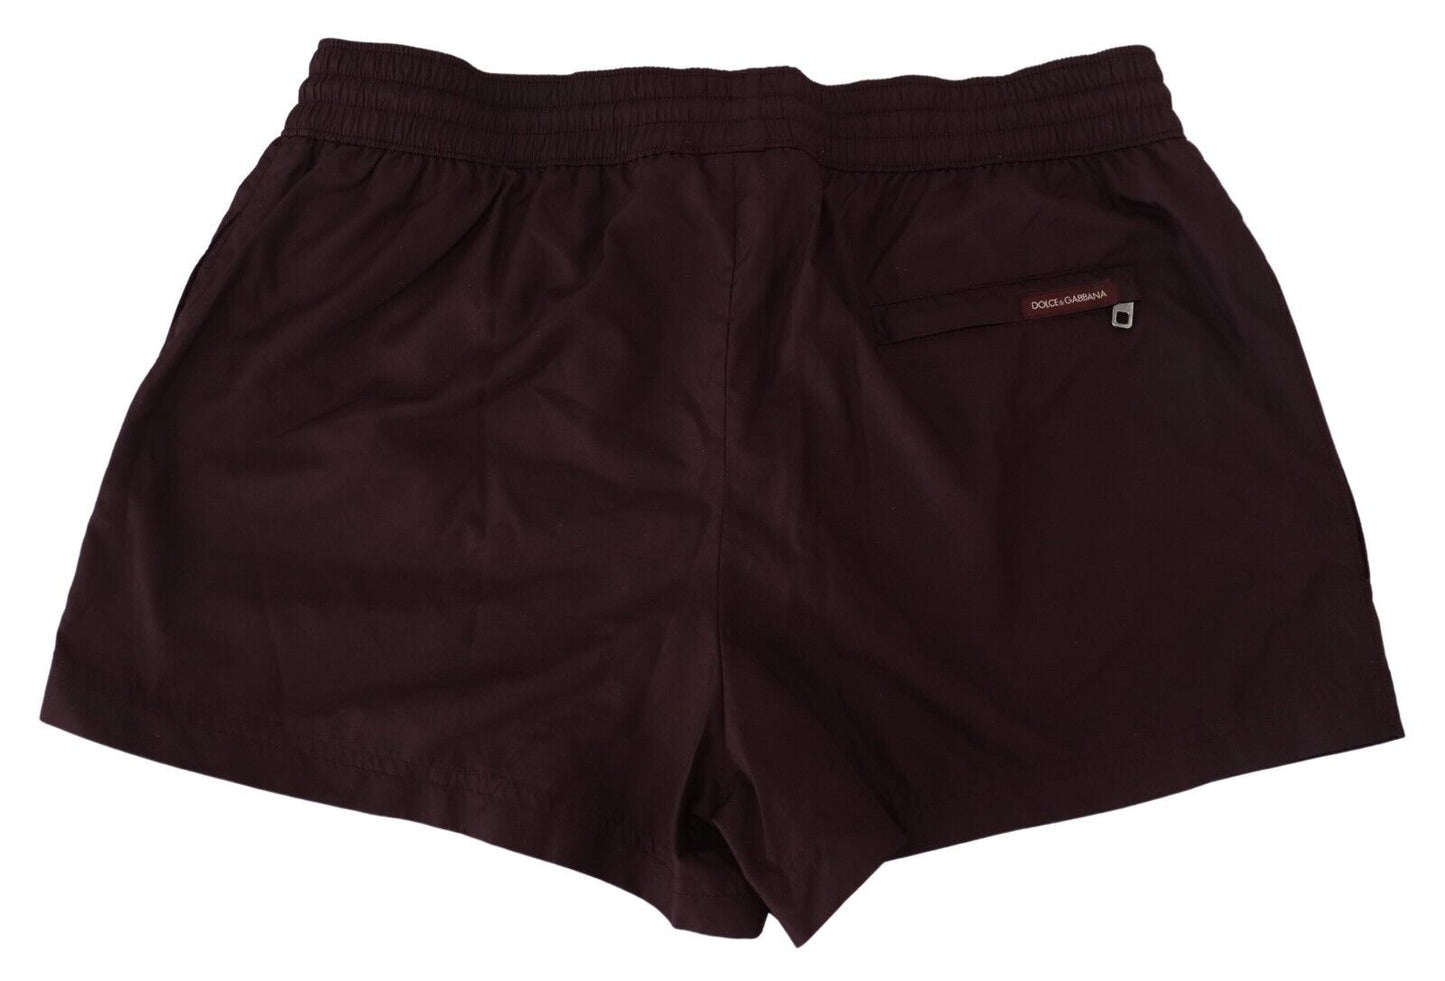 Maroon Elegance Swim Trunks Boxer Shorts